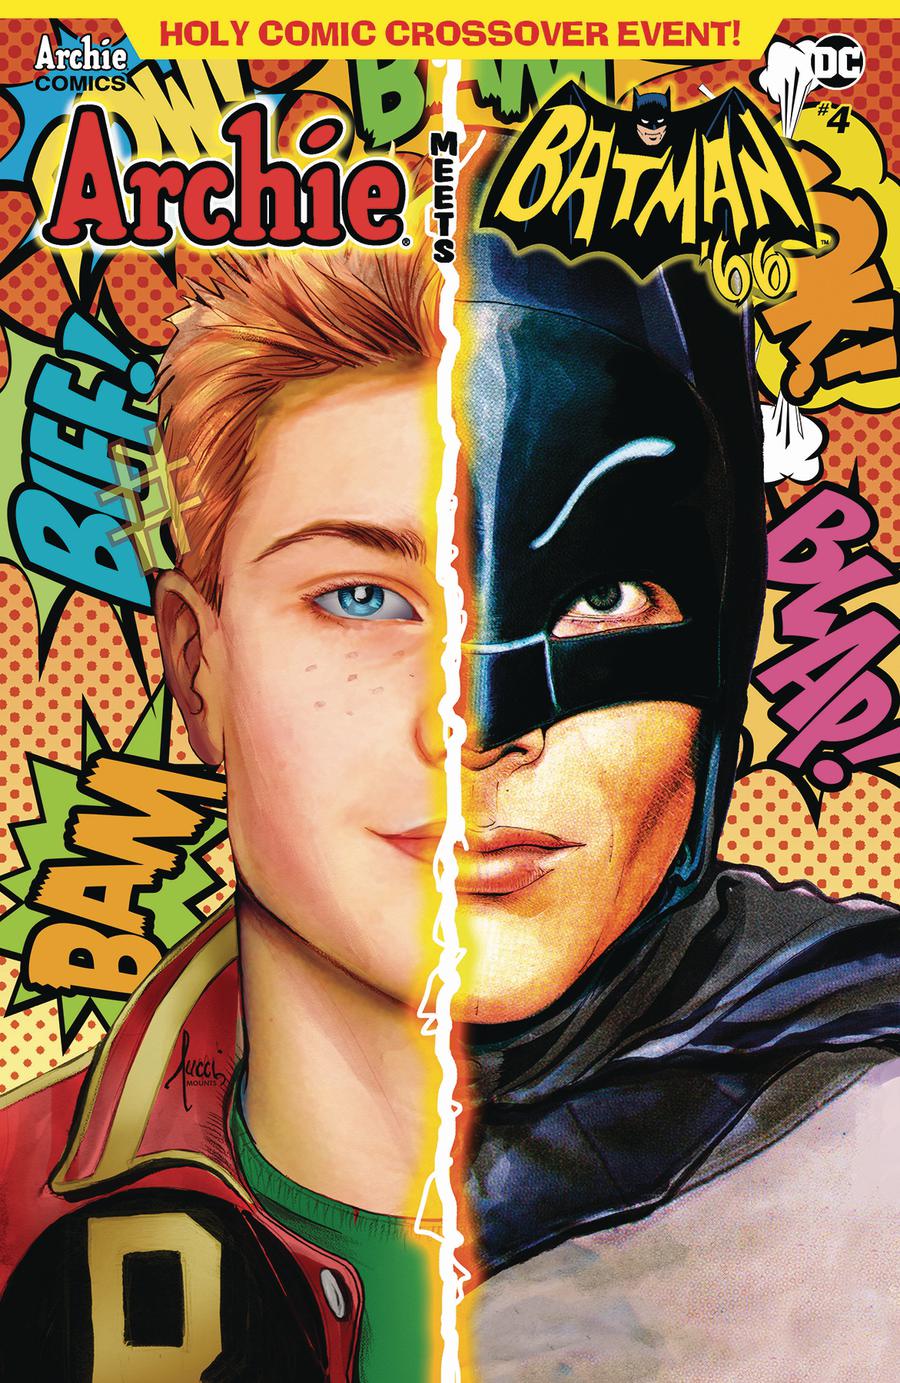 Archie Meets Batman 66 #4 Cover E Variant Billy Tucci & Paul Mounts Cover